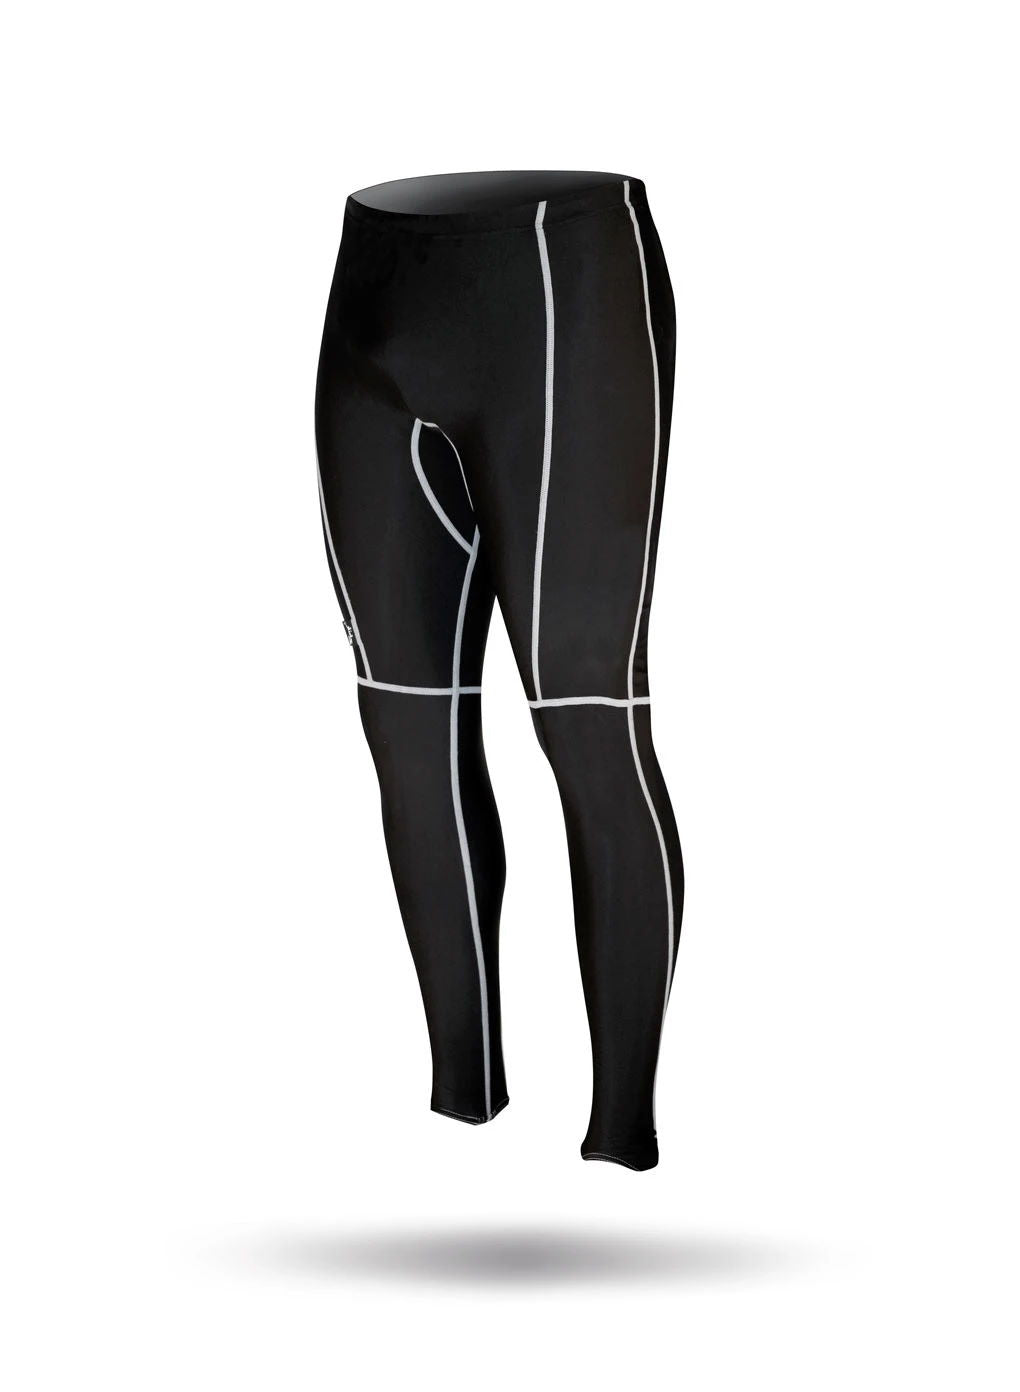 Men's Spandex Leggings Fitness Pants Stretch Low Waist Shiny Tight Gym Wear  SPW | eBay